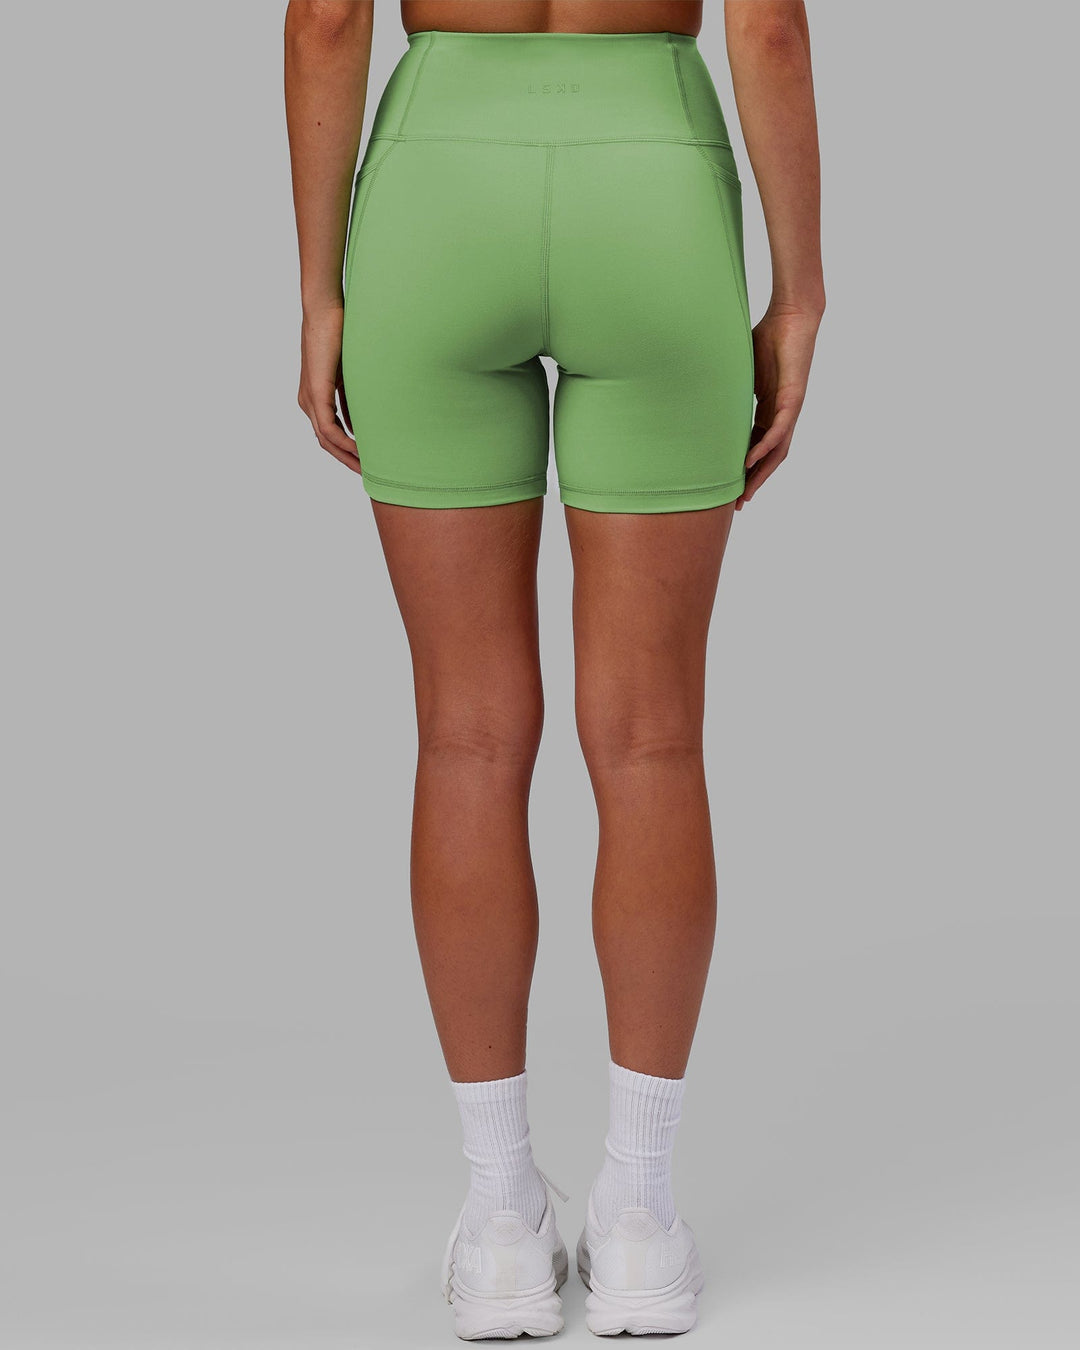 Flux Mid-Length Shorts - Apple Mint